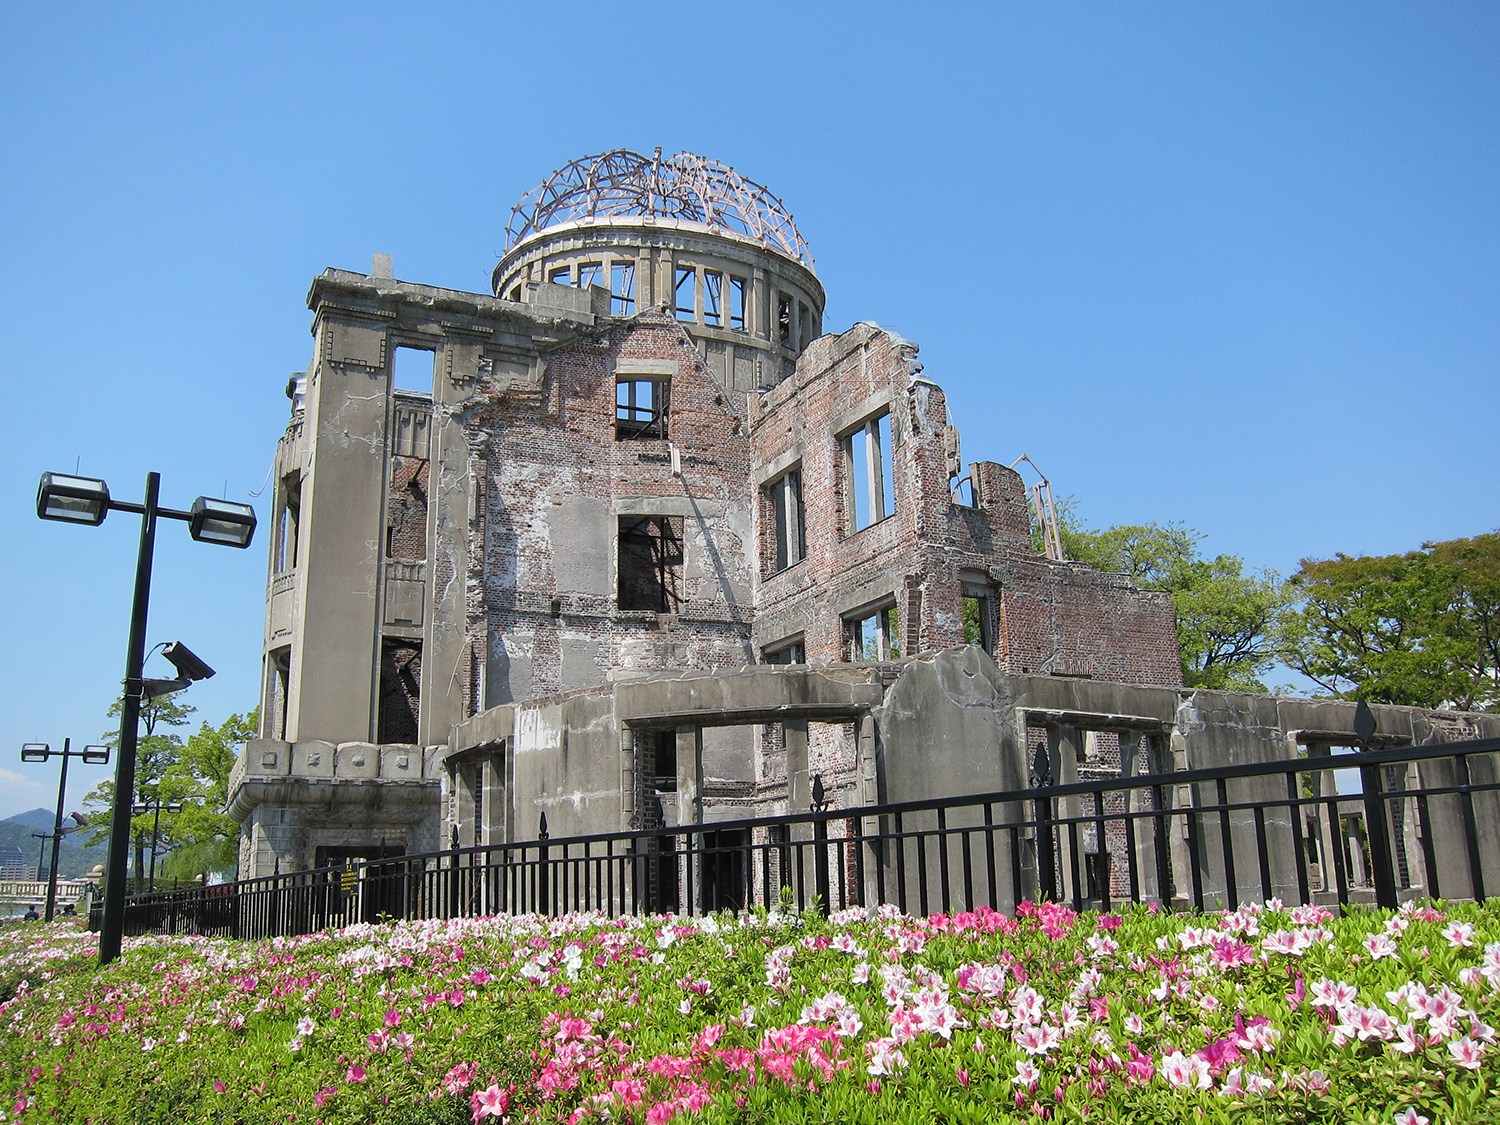 Day 10 - Hiroshima Peace Park, Museum & Children's Memorial